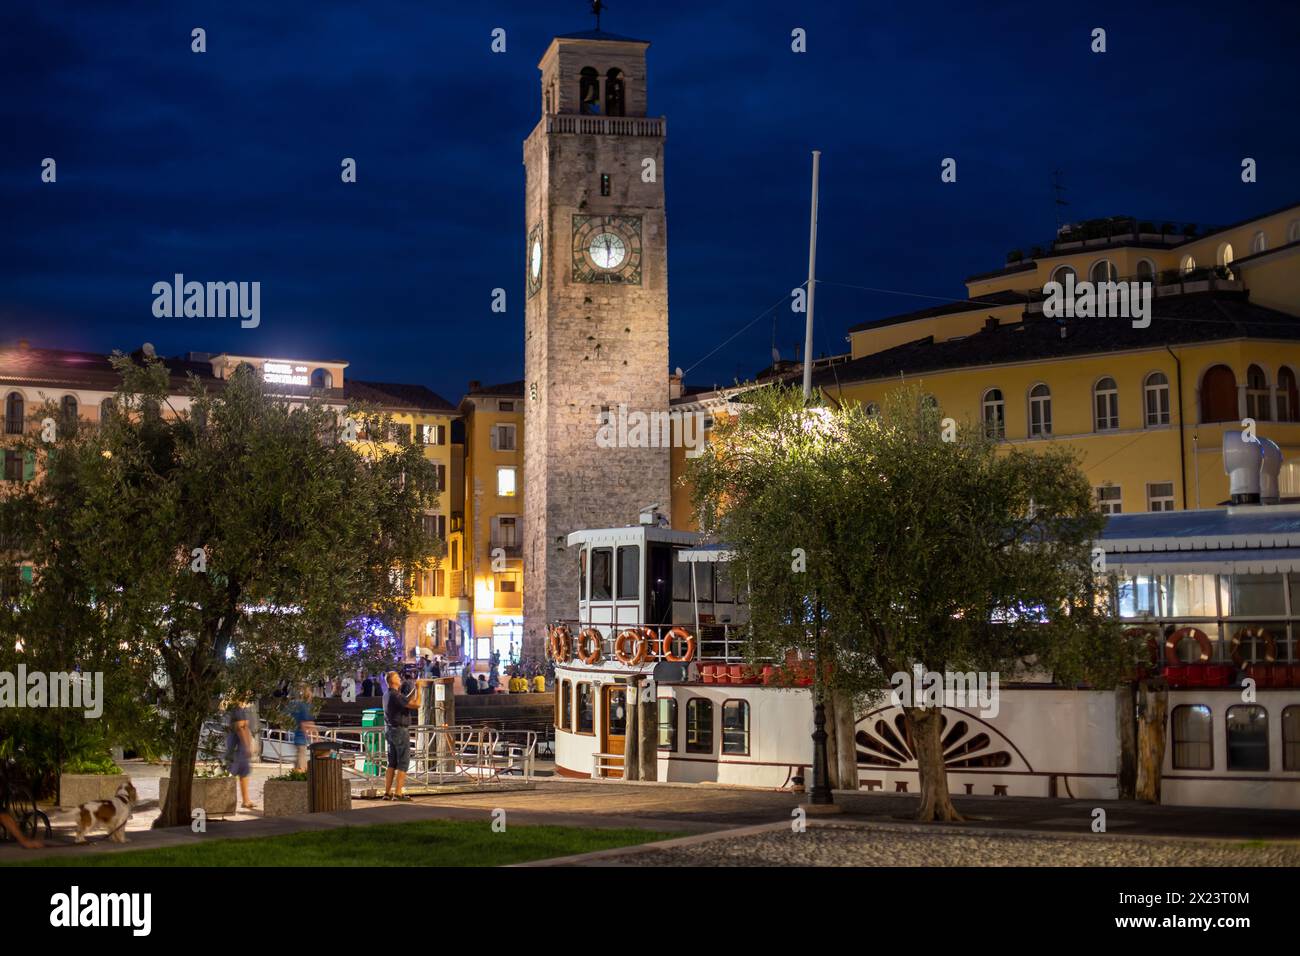 Le port de Riva del Garda la nuit, lac de Garde, Italie Banque D'Images